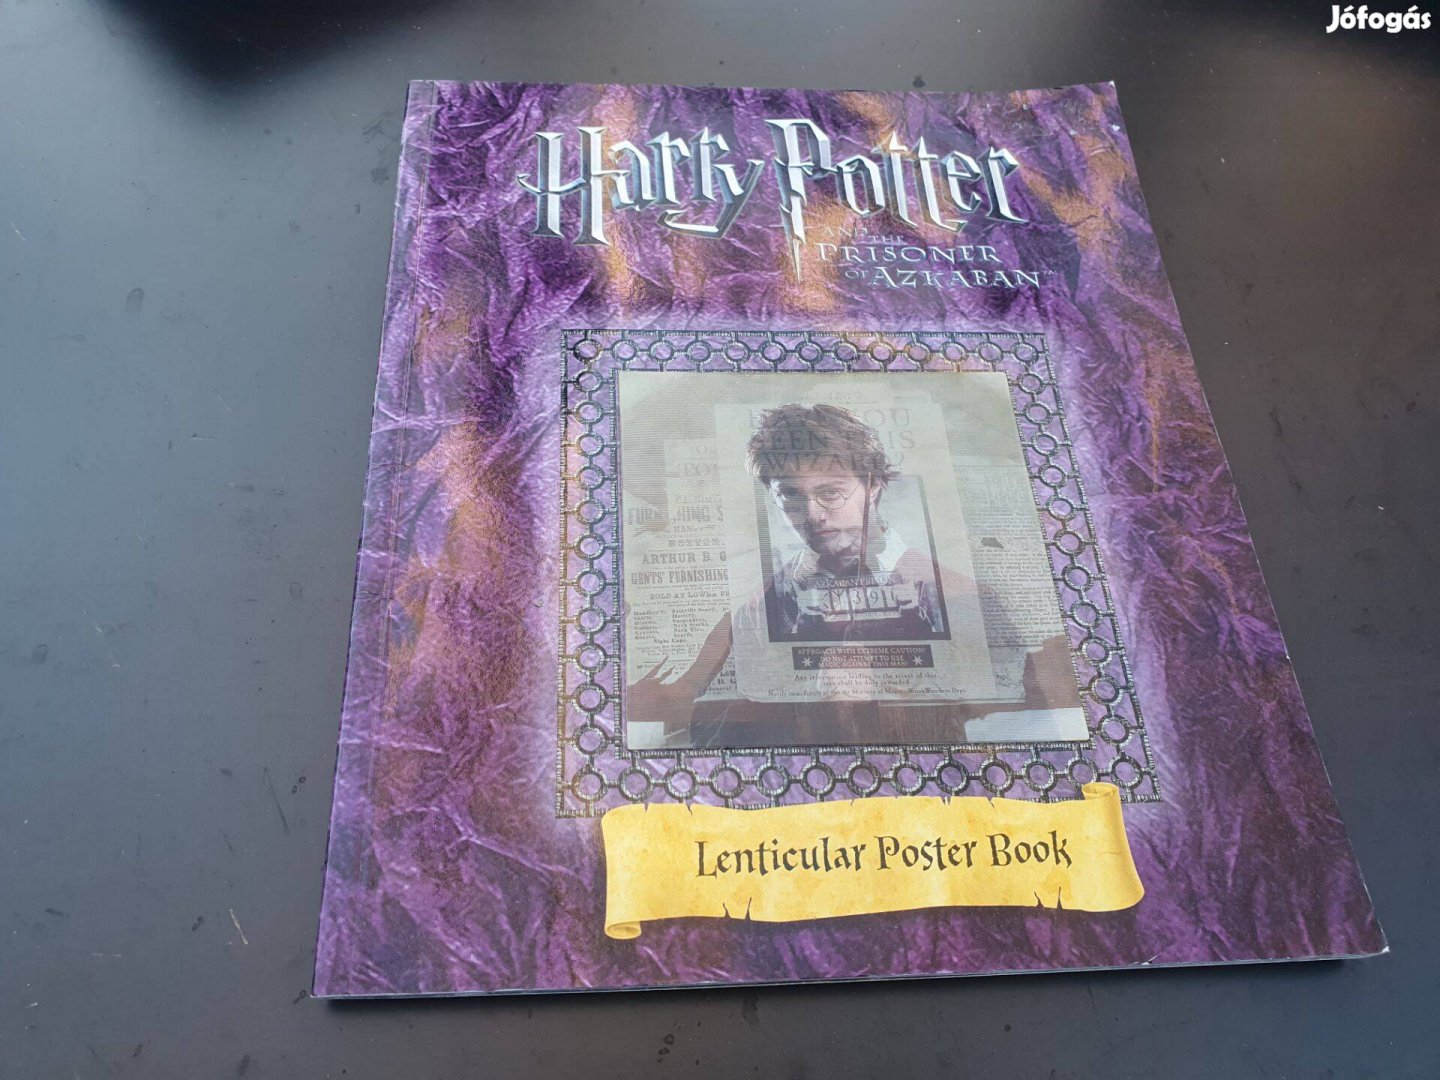 Harry Potter and The Prisoner of Azkaban - Lenticular Poster Book